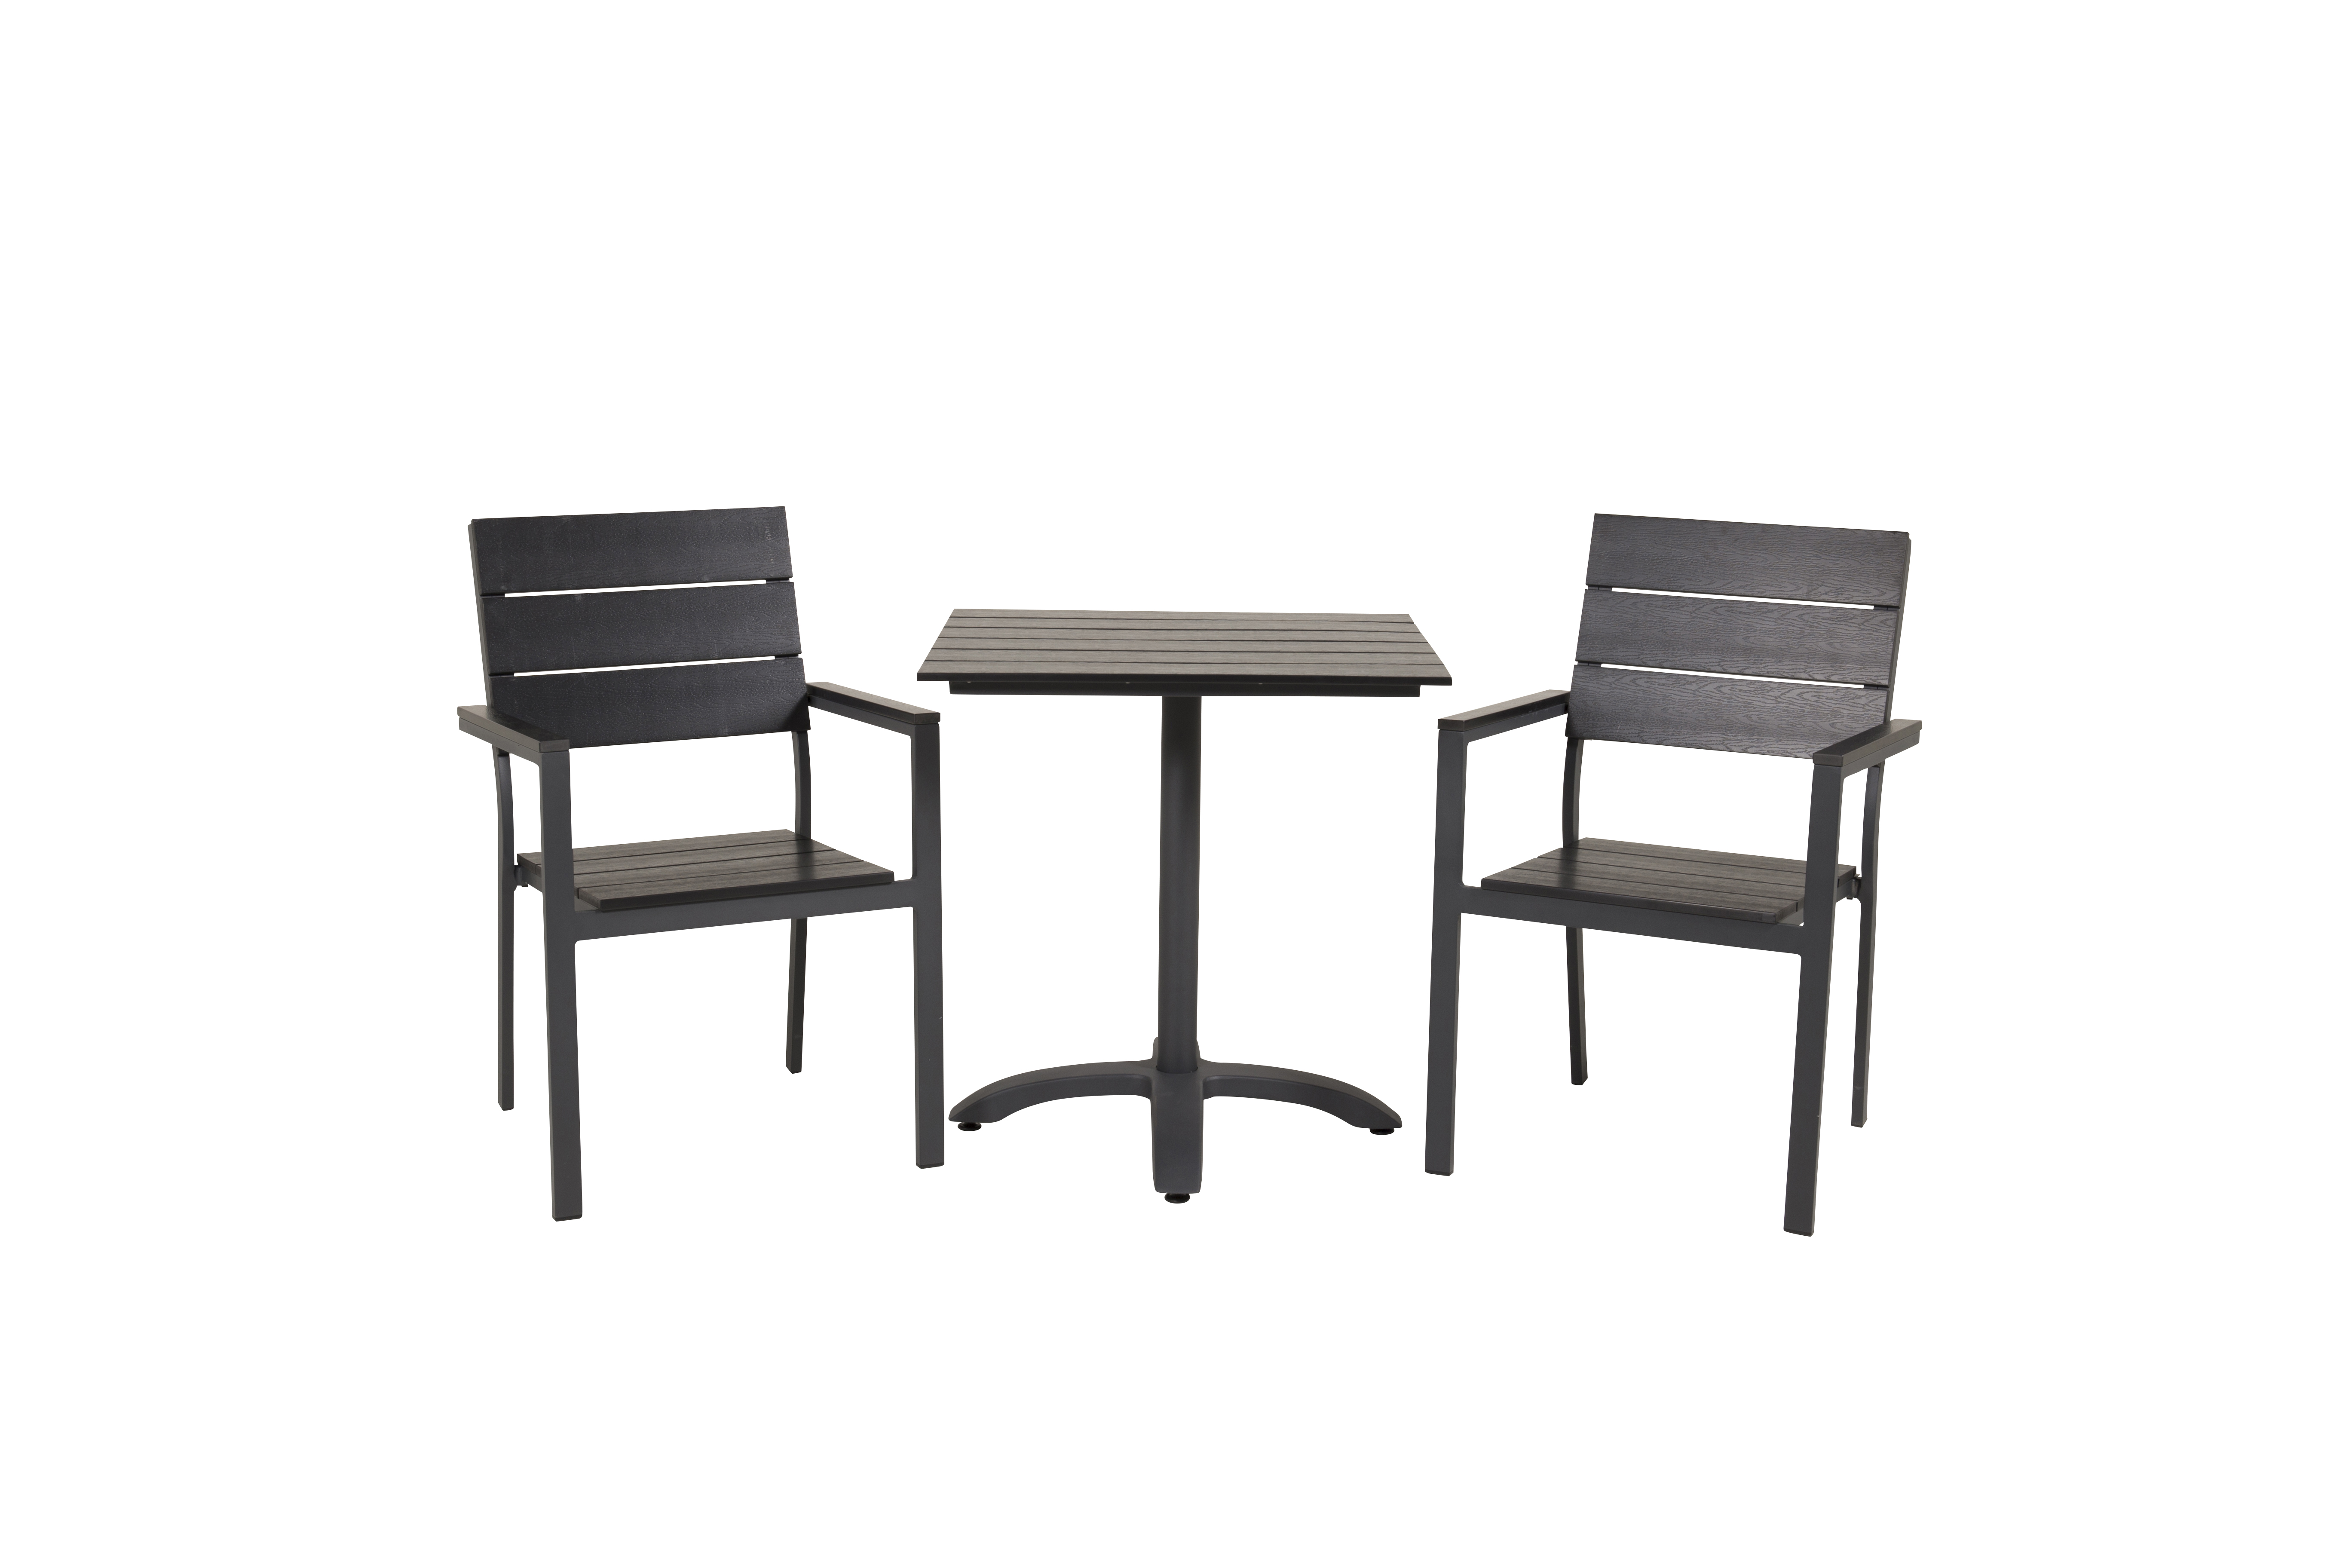 Venture Design - Colorado Cafe Table 70x70 cm - Alu/Aintwood with 2 pcs. Levels Garden Chair - Alu/Aintwood - Bundle